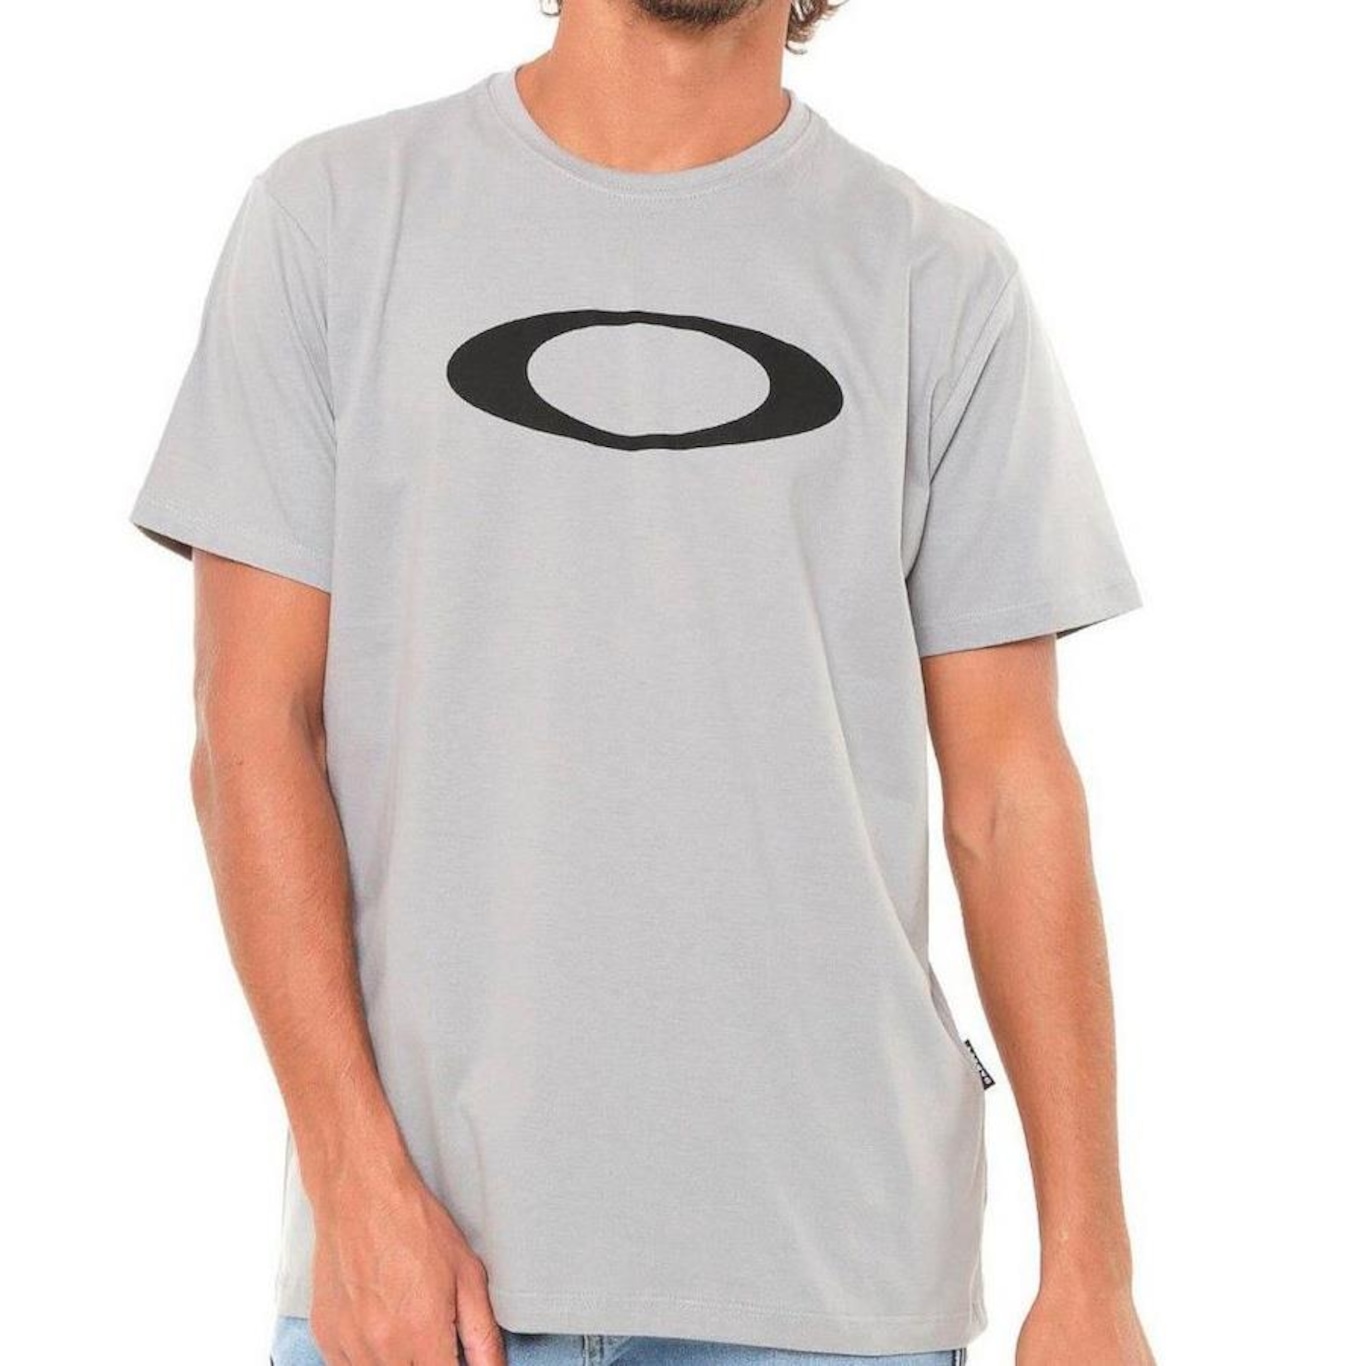 Camiseta Oakley Embroidery - Masculina